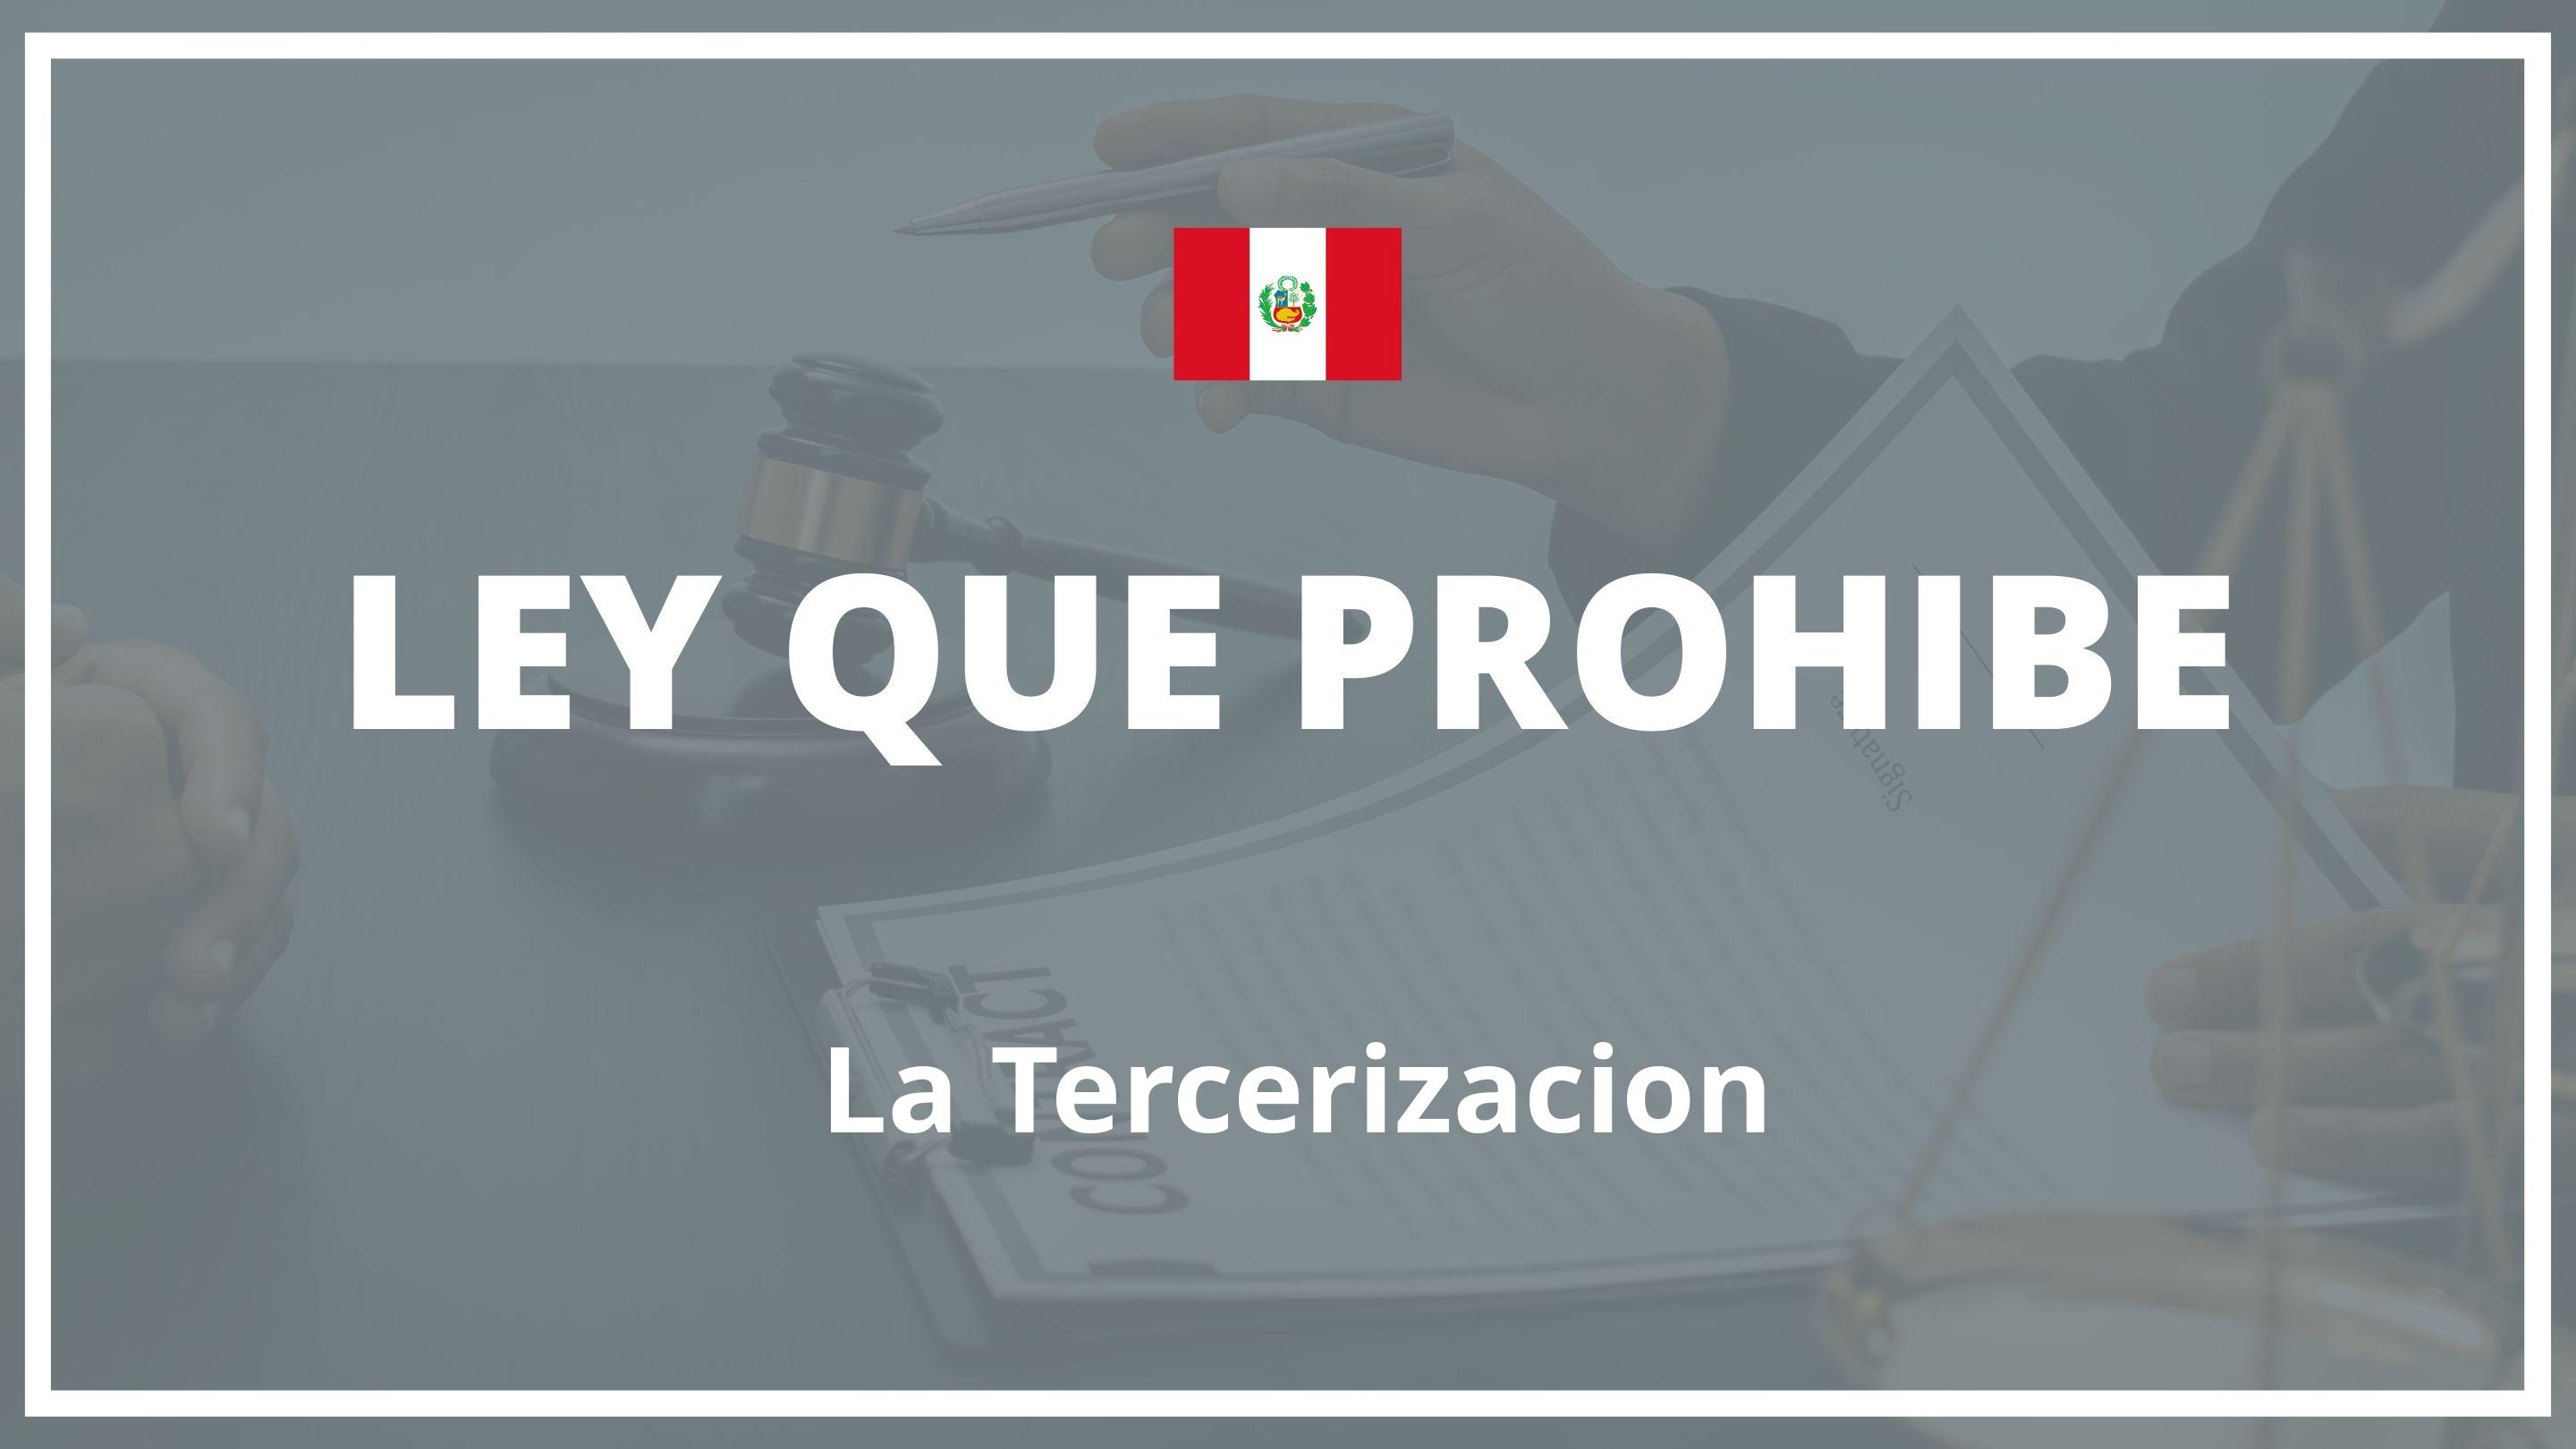 Ley que prohibe la tercerizacion Peru